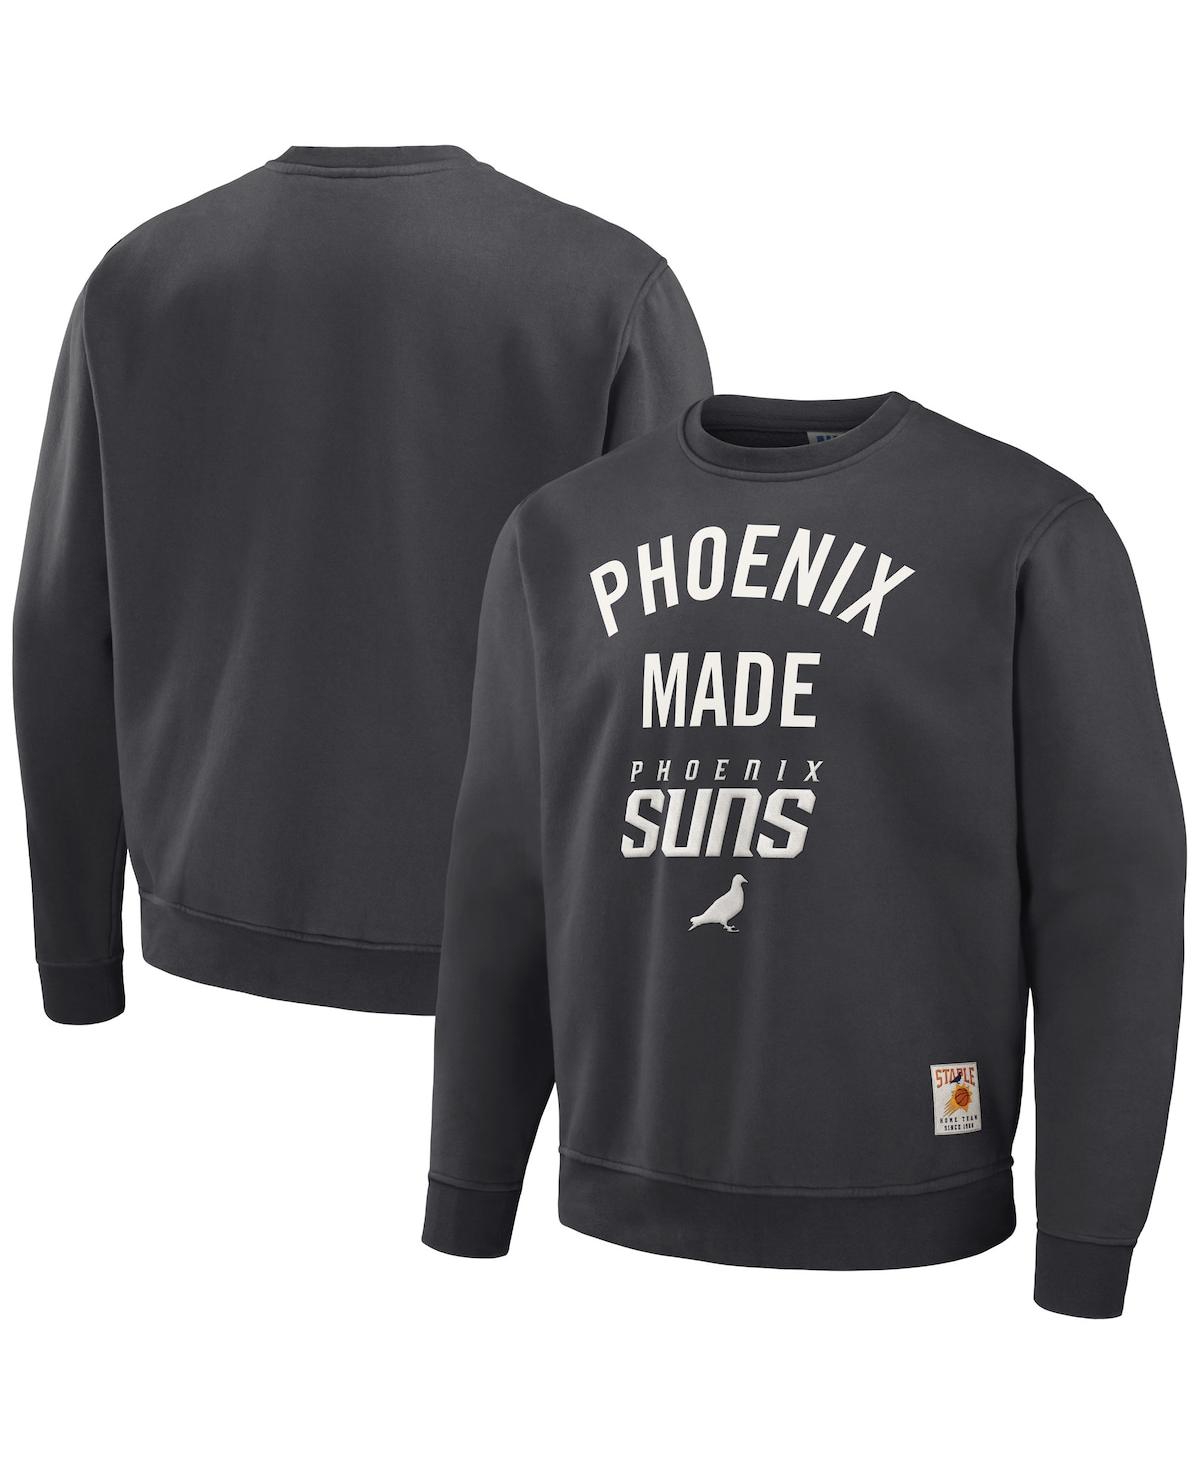 Men's Nba x Staple Anthracite Phoenix Suns Plush Pullover Sweatshirt - Anthracite